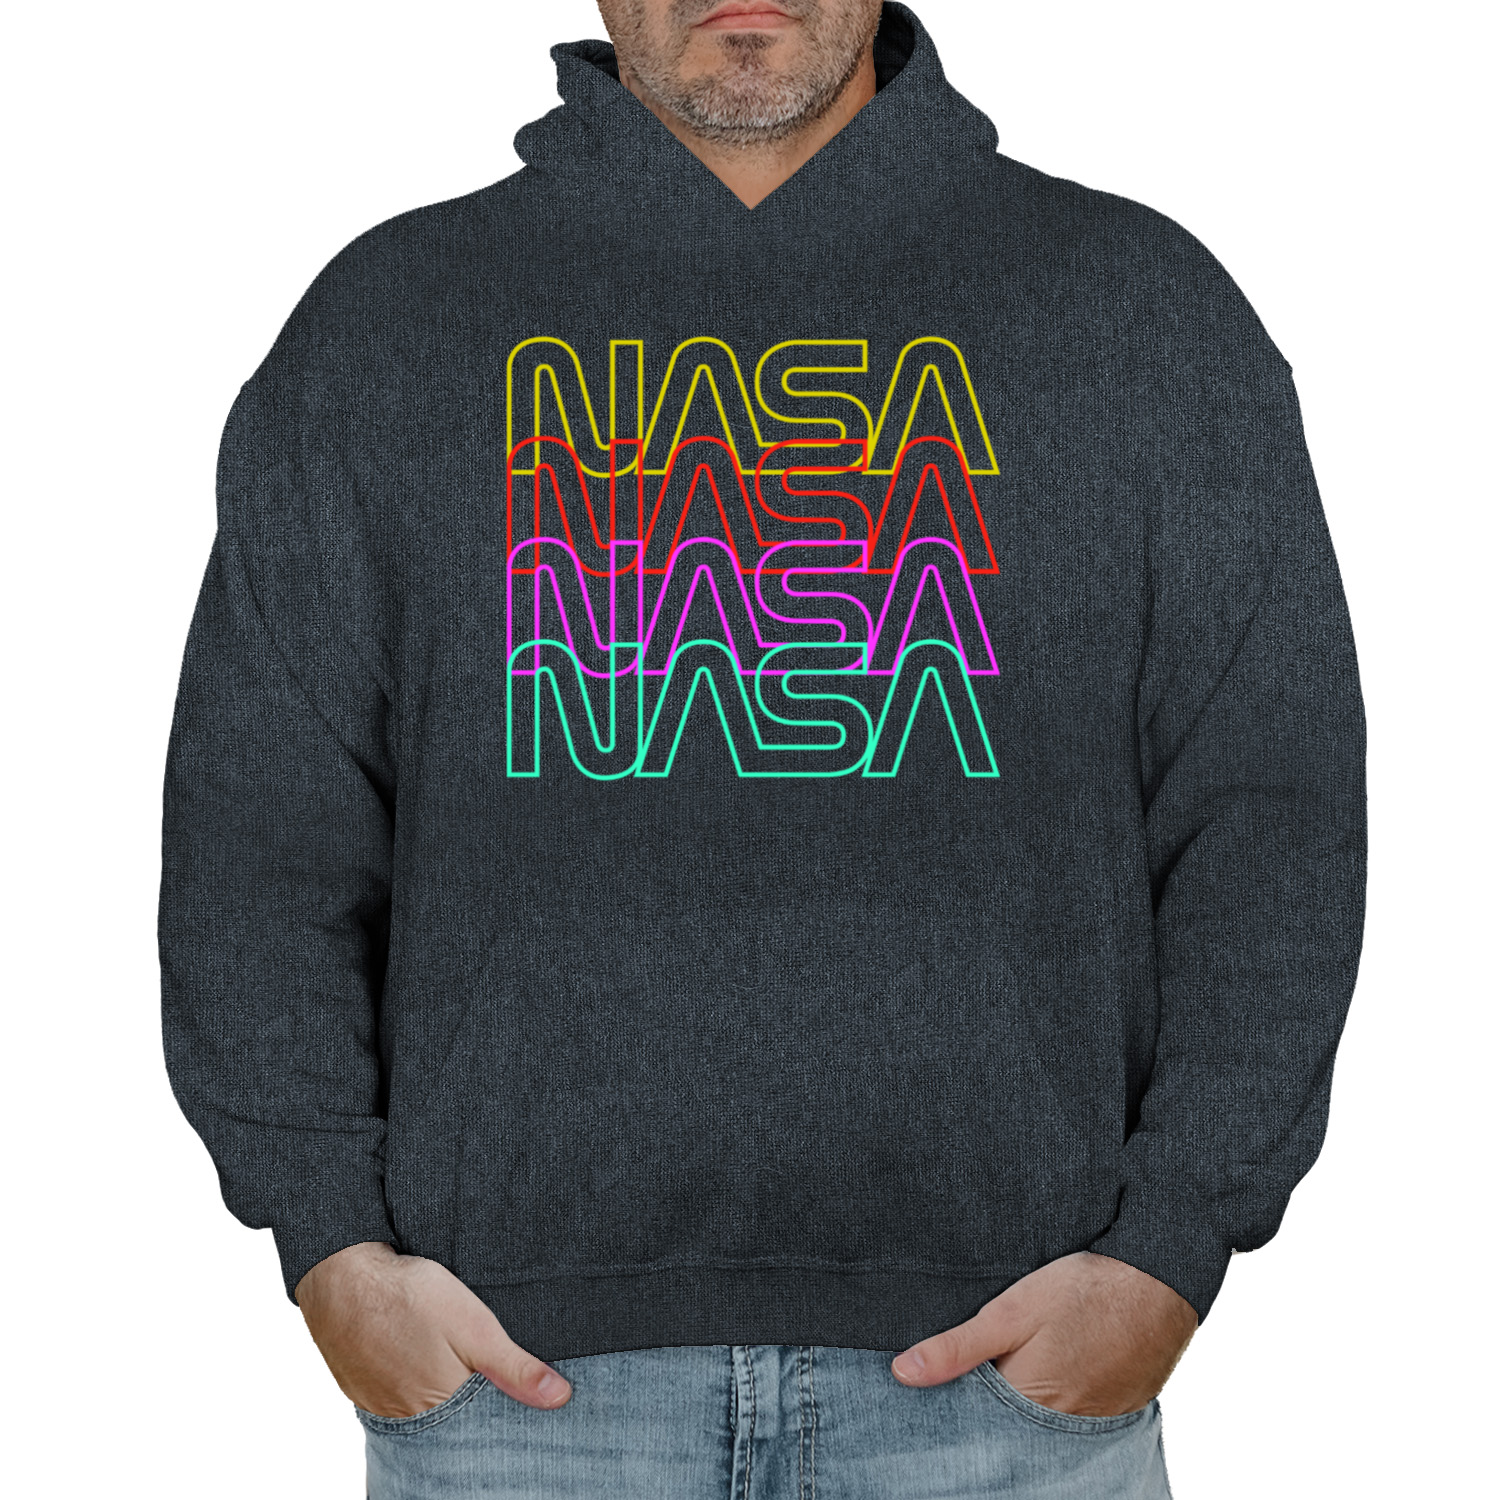 NASA Worm Hoodie